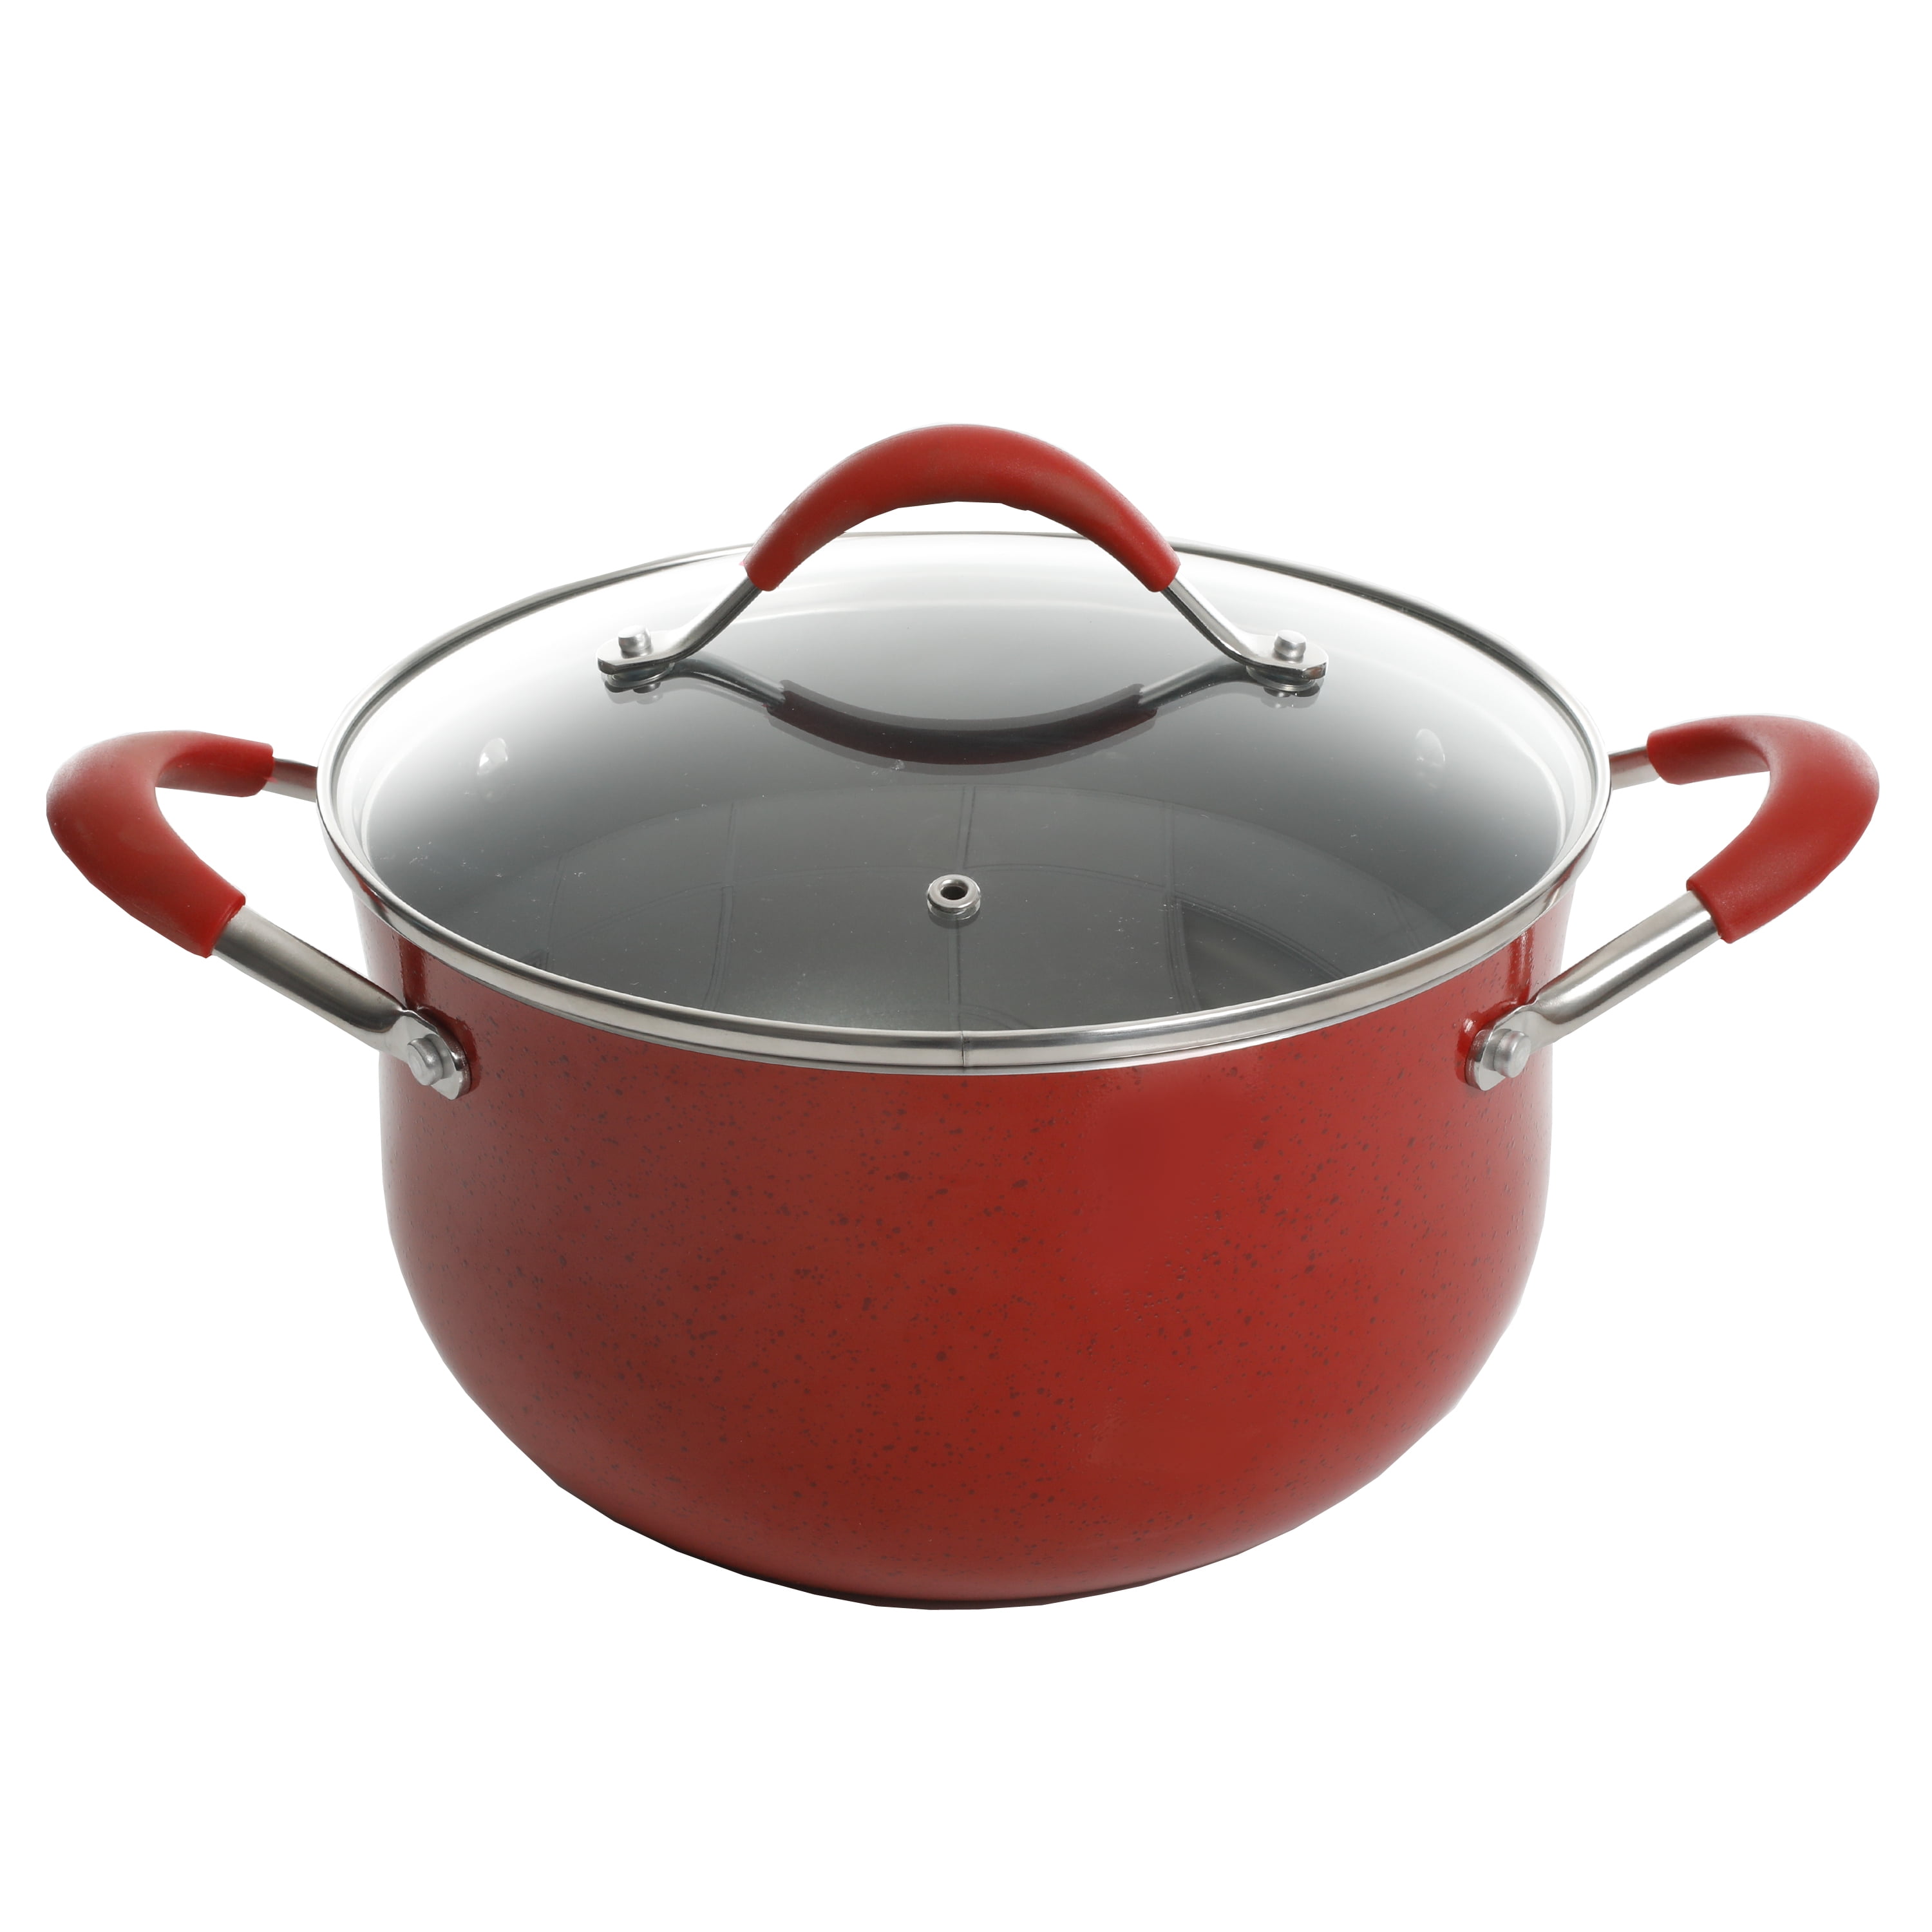 Aoibox 10-Piece Ceramic Nonstick Cookware Set with Saucepans, Frying Pans, Dutch Oven Pots with Lids, Red